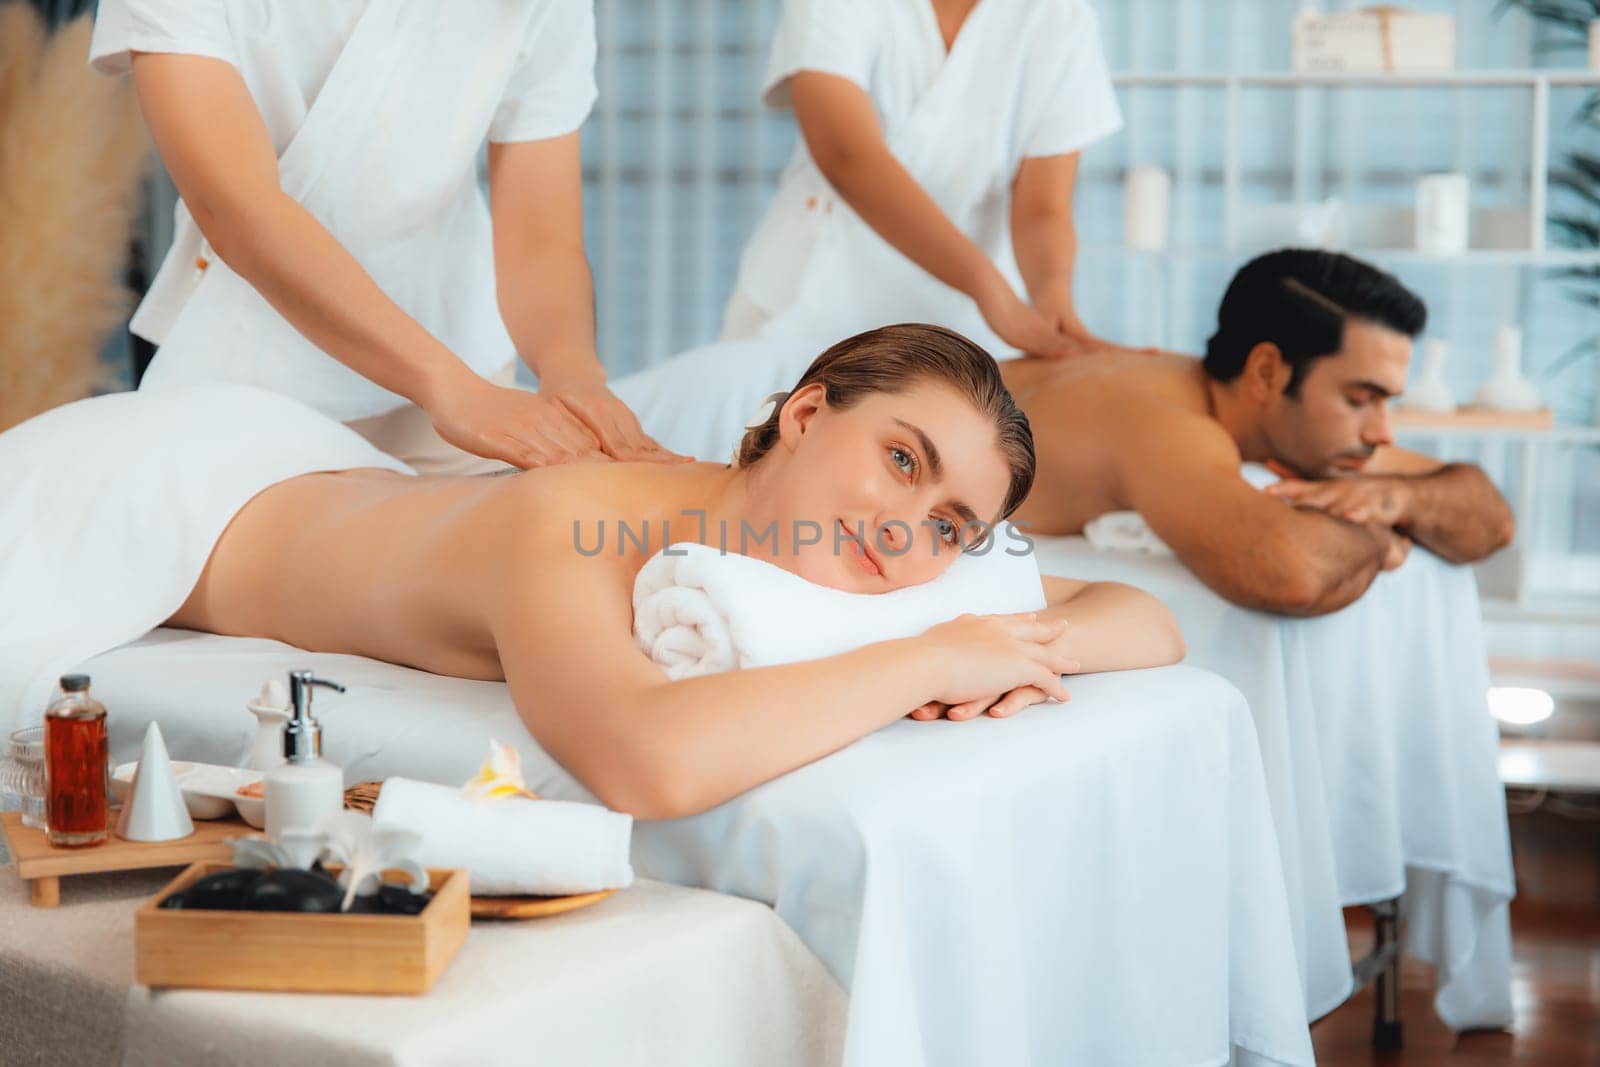 Caucasian couple customer enjoying relaxing anti-stress massage. Quiescent by biancoblue